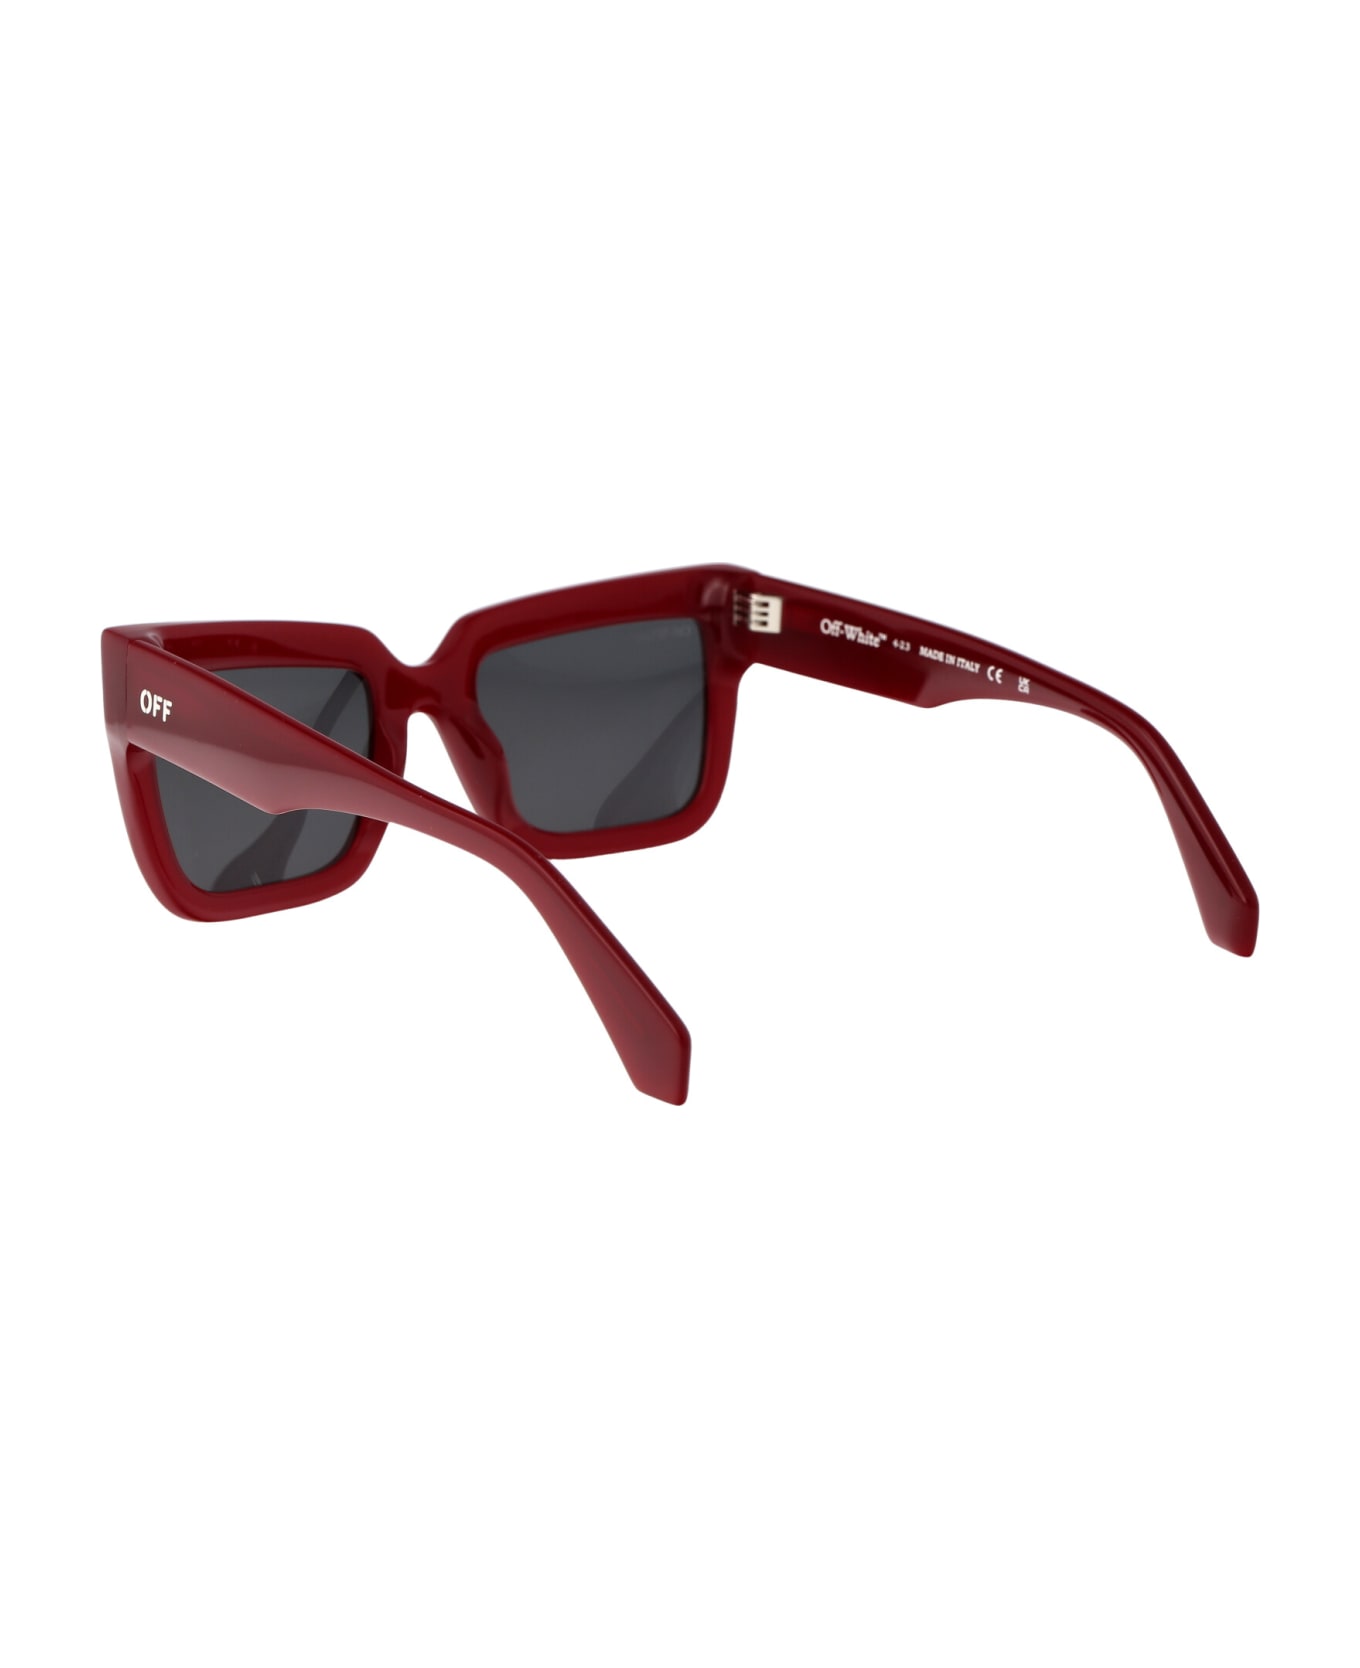 Off-White Firenze Sunglasses - 2707 BURGUNDY